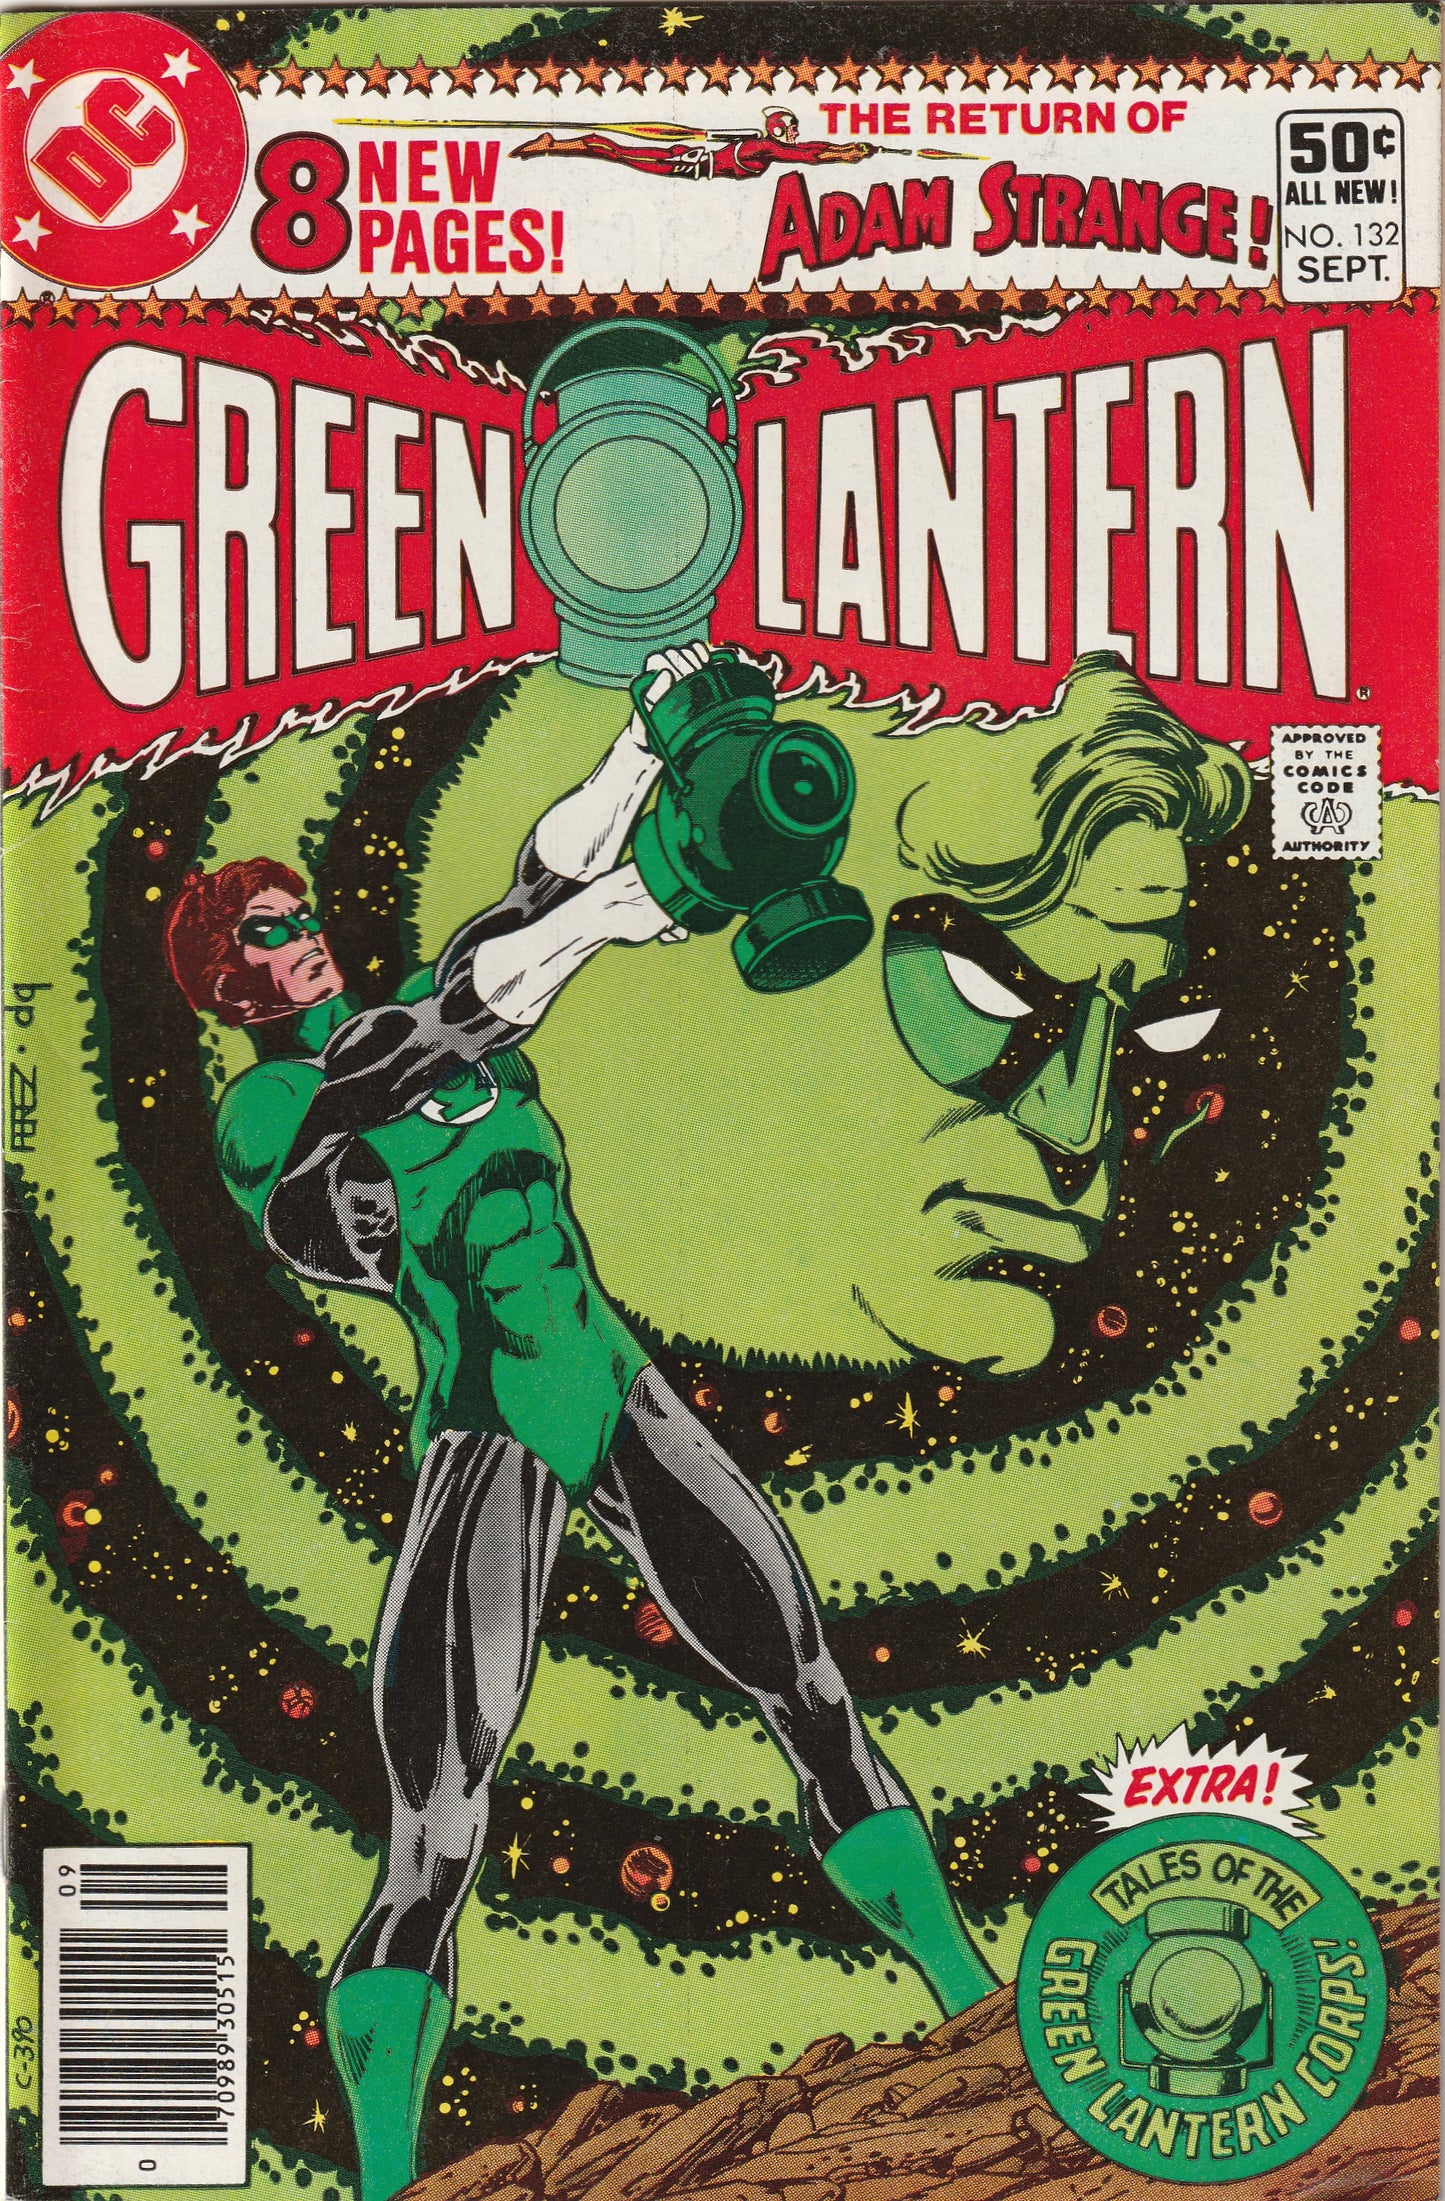 Green Lantern #132 (1980) - Tales of the Green Lantern Corps & Adam Strange begins